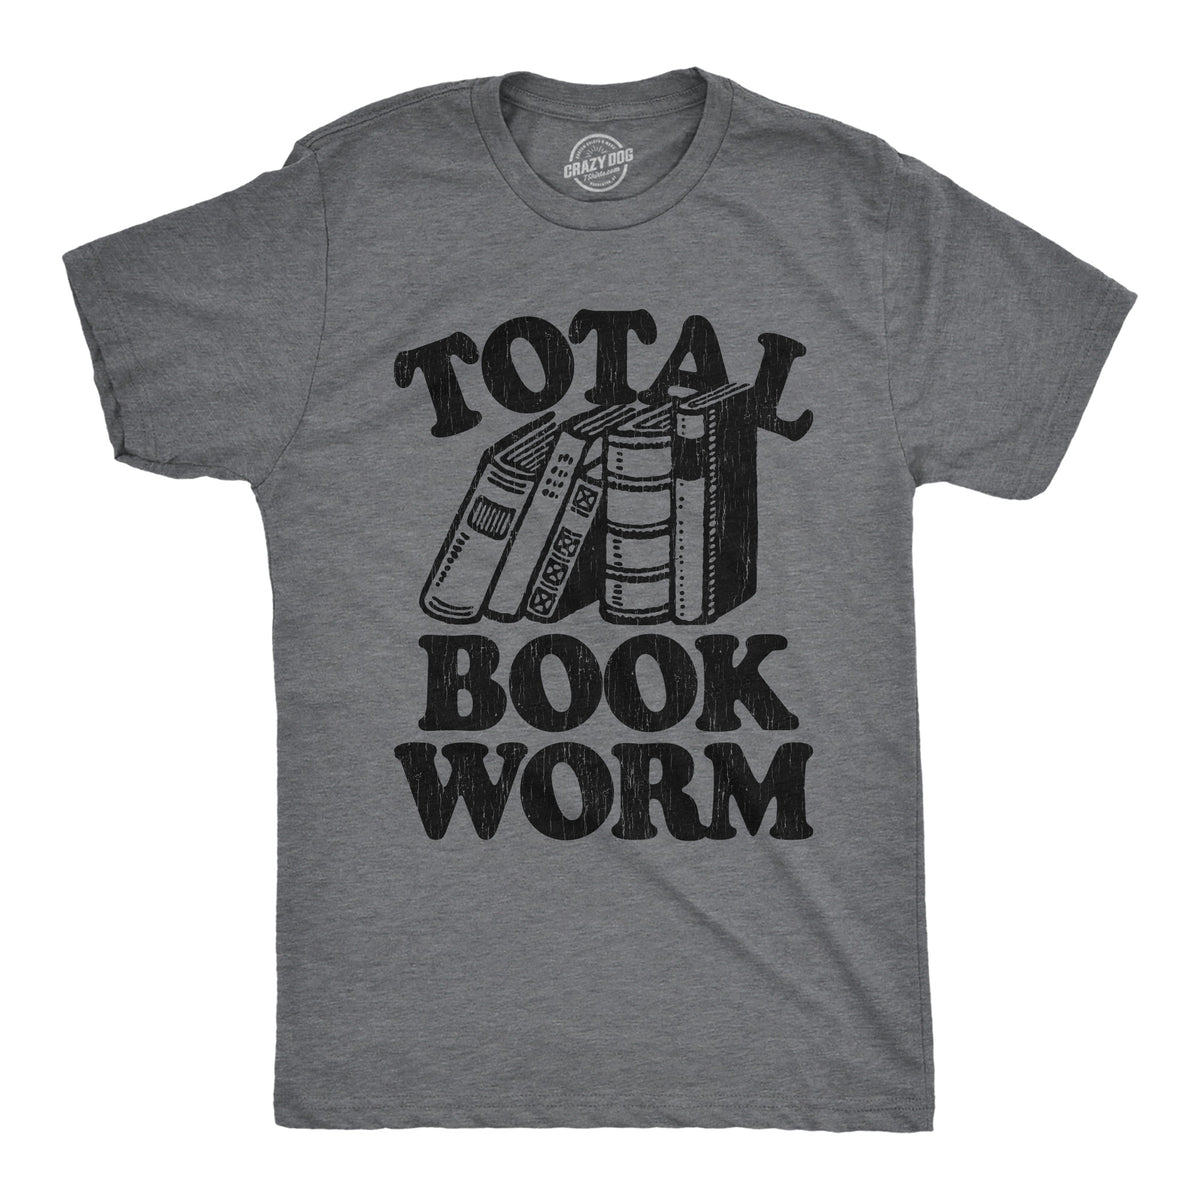 Funny Dark Heather Grey - BOOK Total Book Worm Mens T Shirt Nerdy Nerdy Tee